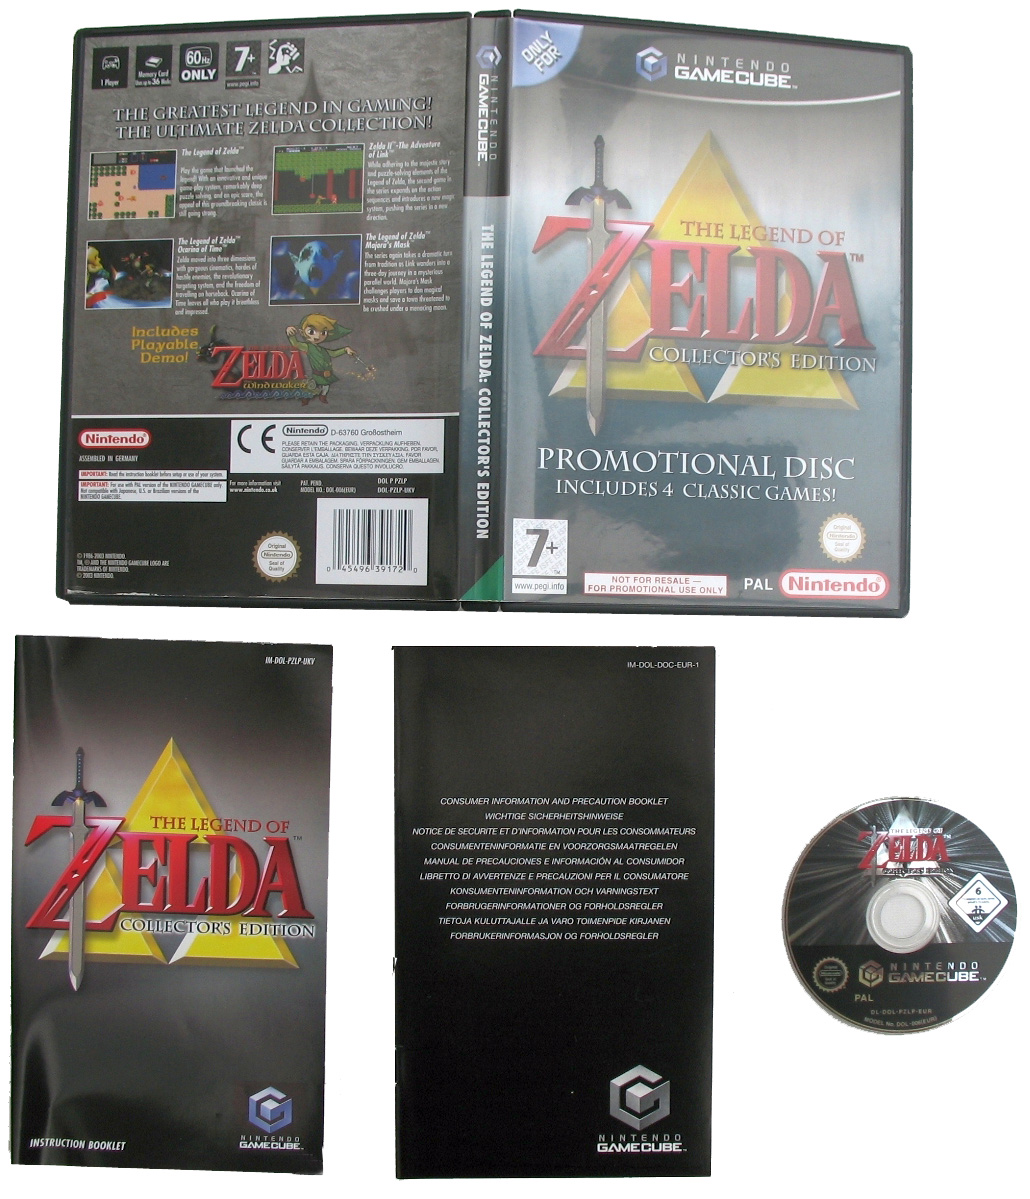 66871-The_Legend_of_Zelda_Collector's_Edition_USA_REPACK_NGC-NOMIS-1.jpg